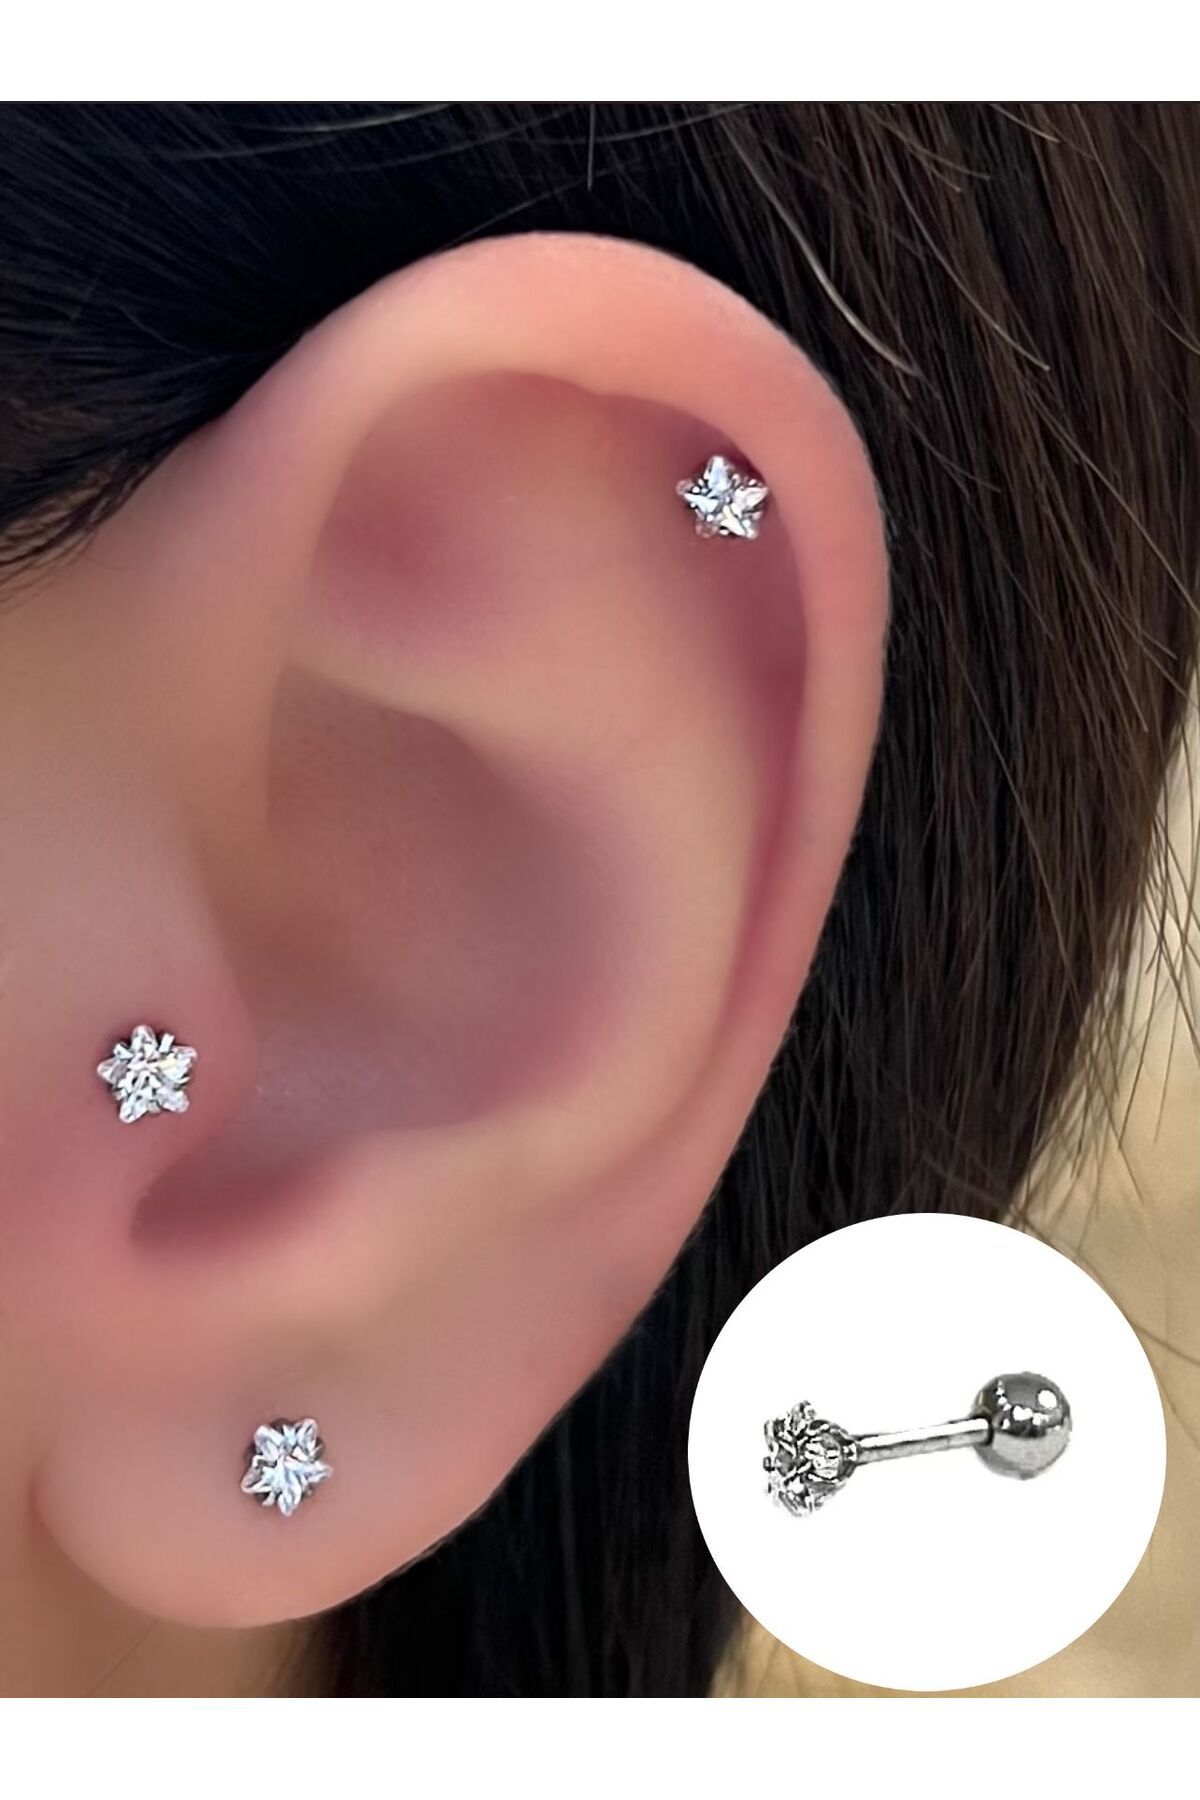 Opal & Diamond Flat Back Earring | Gold Helix, Tragus Stud – Two of Most